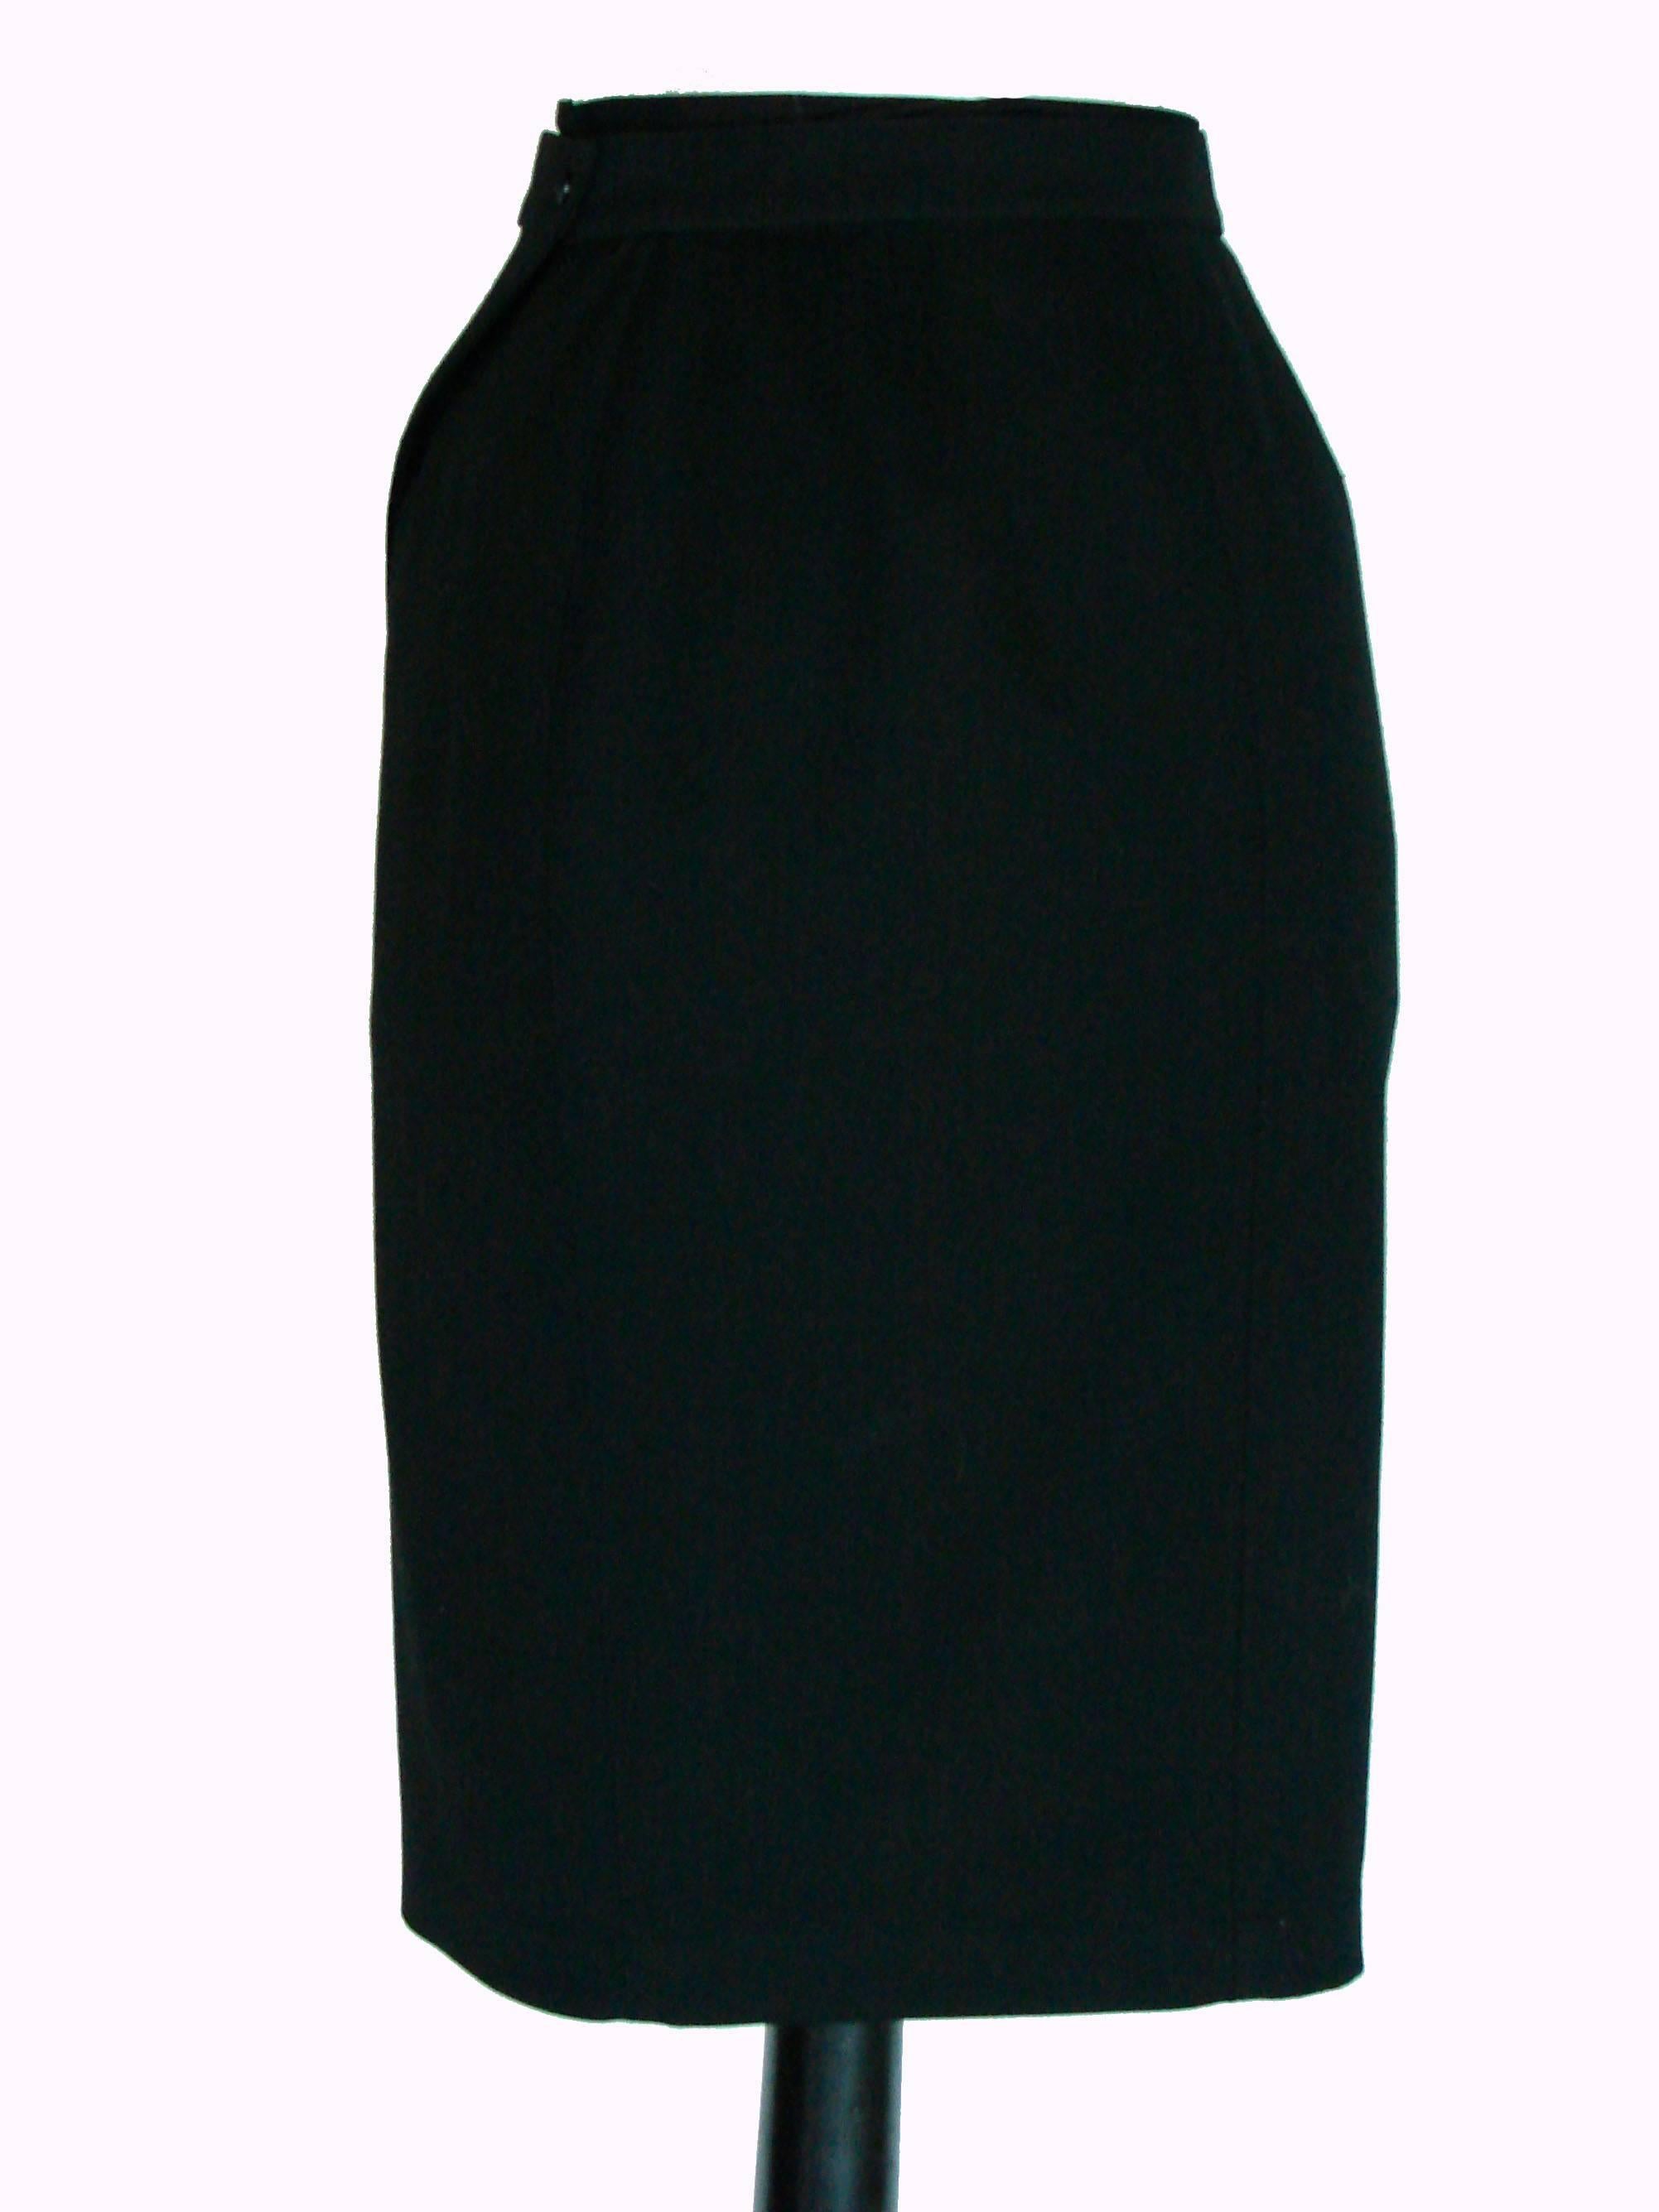 Thierry Mugler Wrap Style Pencil Skirt Black Wool with Velvet Trim 1980s Sz 36 1